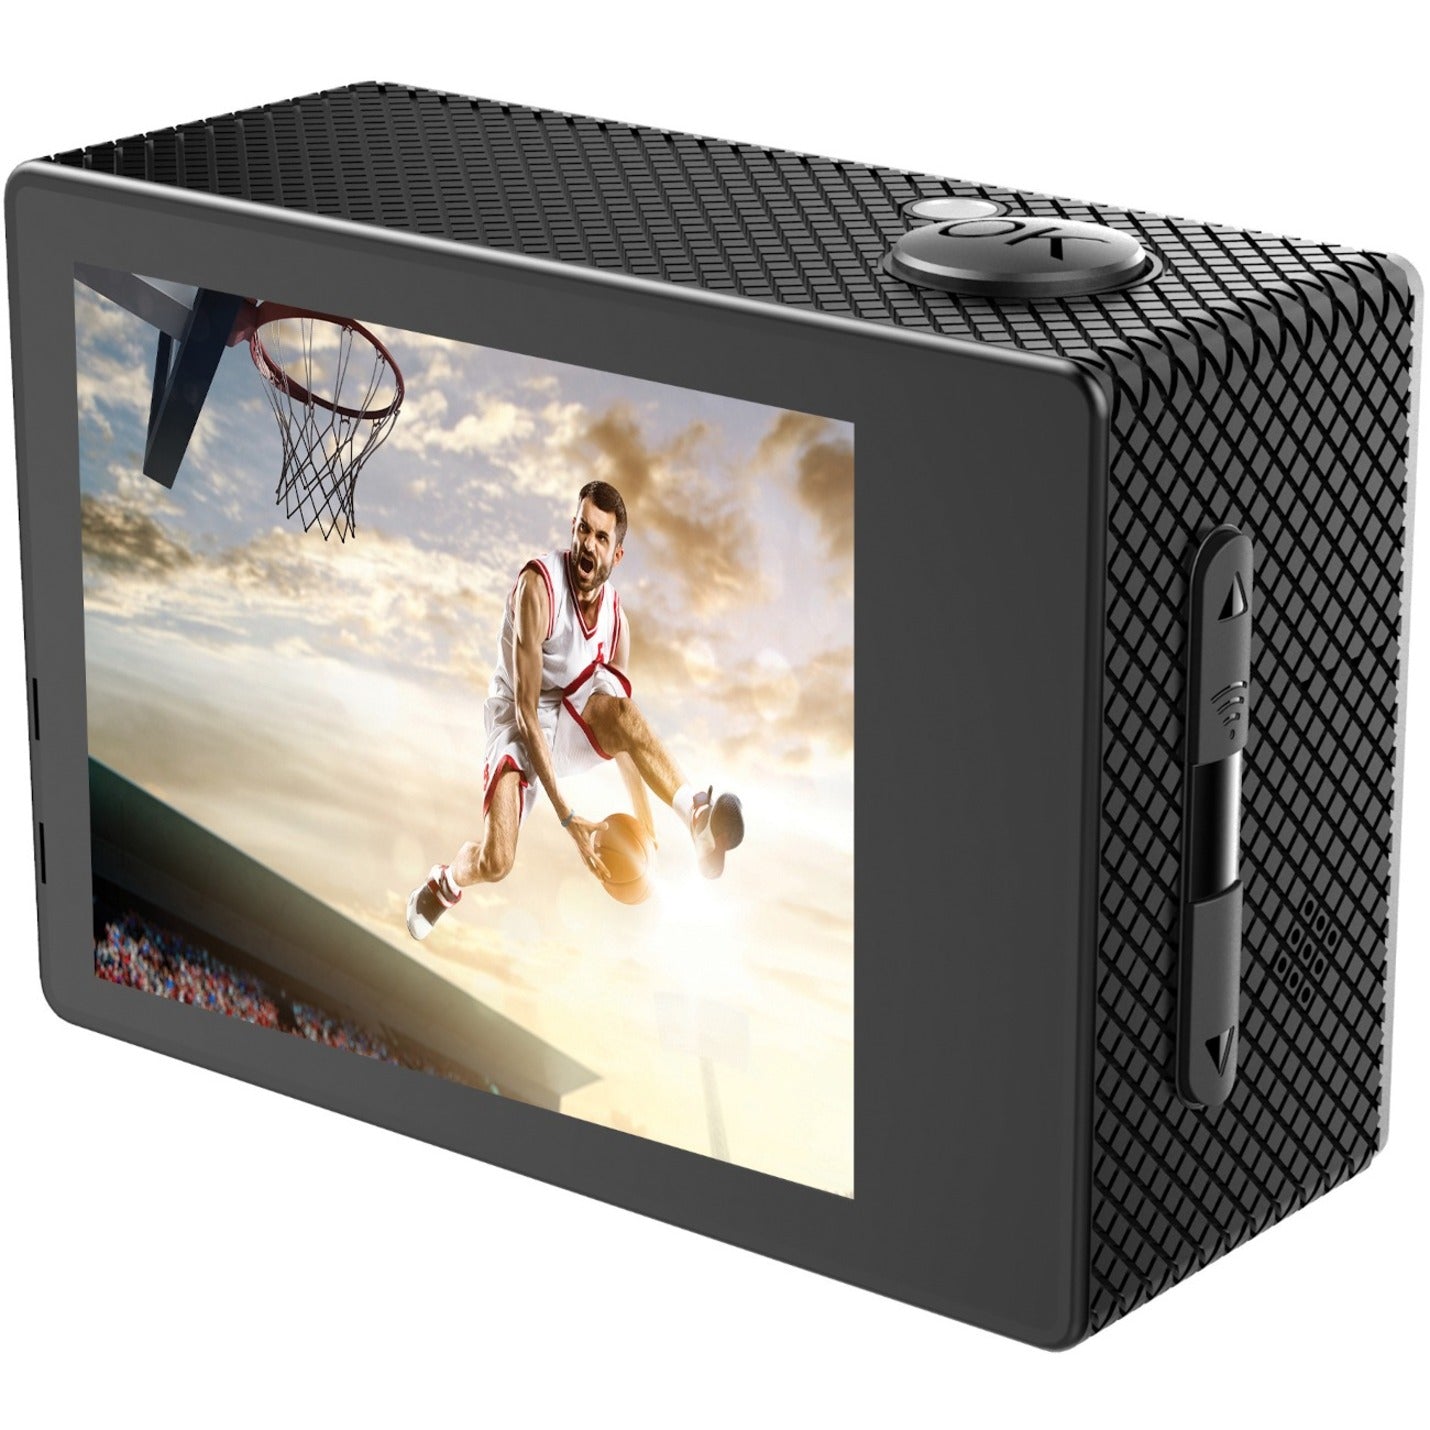 Naxa NDC-409 Waterproof FHD Action Camera, Dust Proof, Water Proof, 2" LCD Screen, HDMI, Wireless LAN